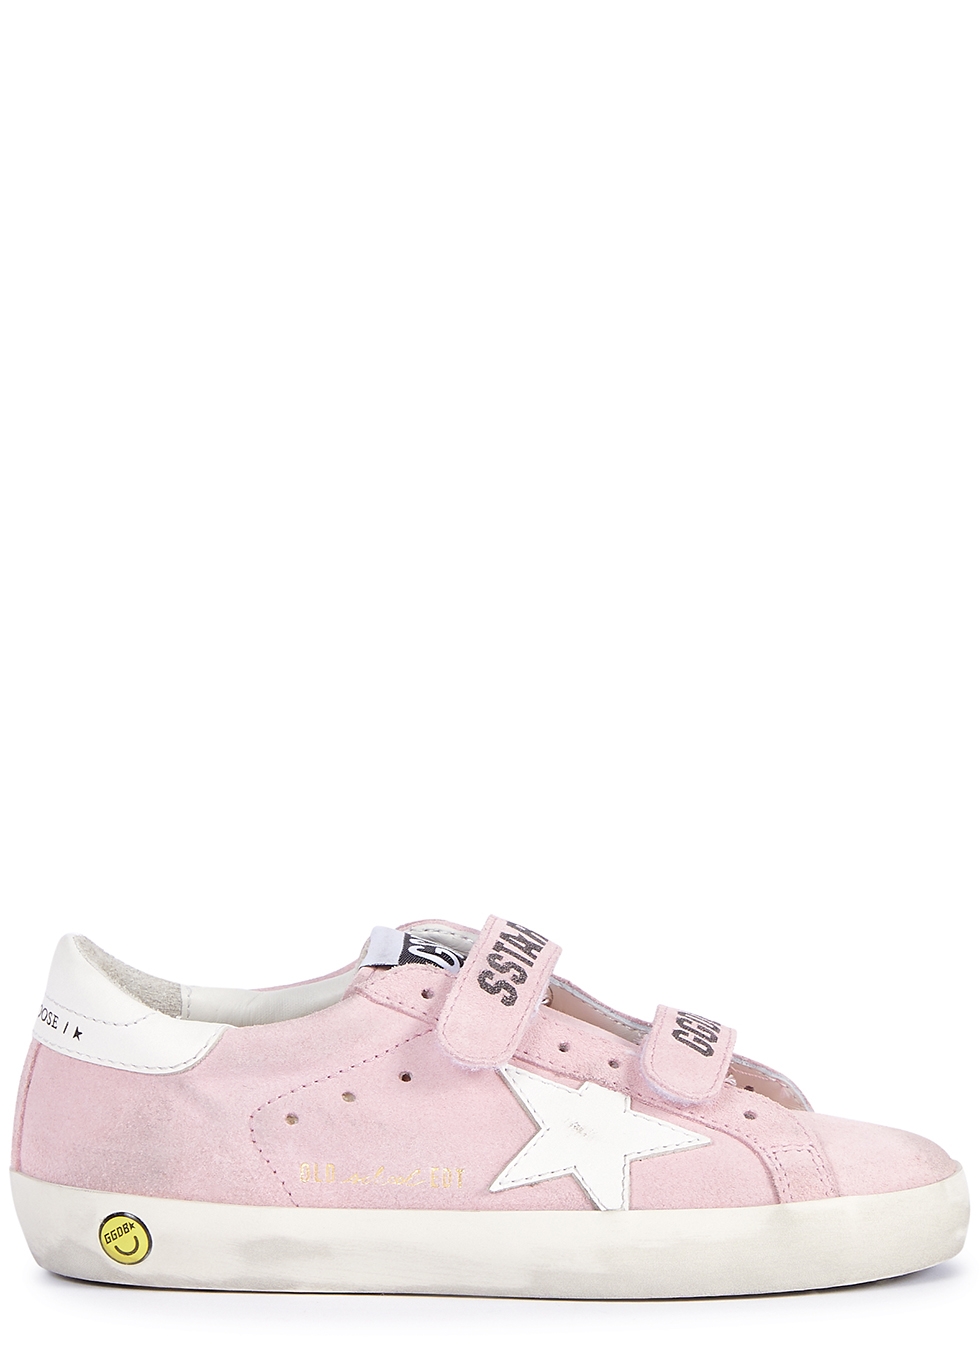 KIDS Old School pink suede sneakers IT28-IT35 Harvey Nichols Shoes Flat Shoes School Shoes 